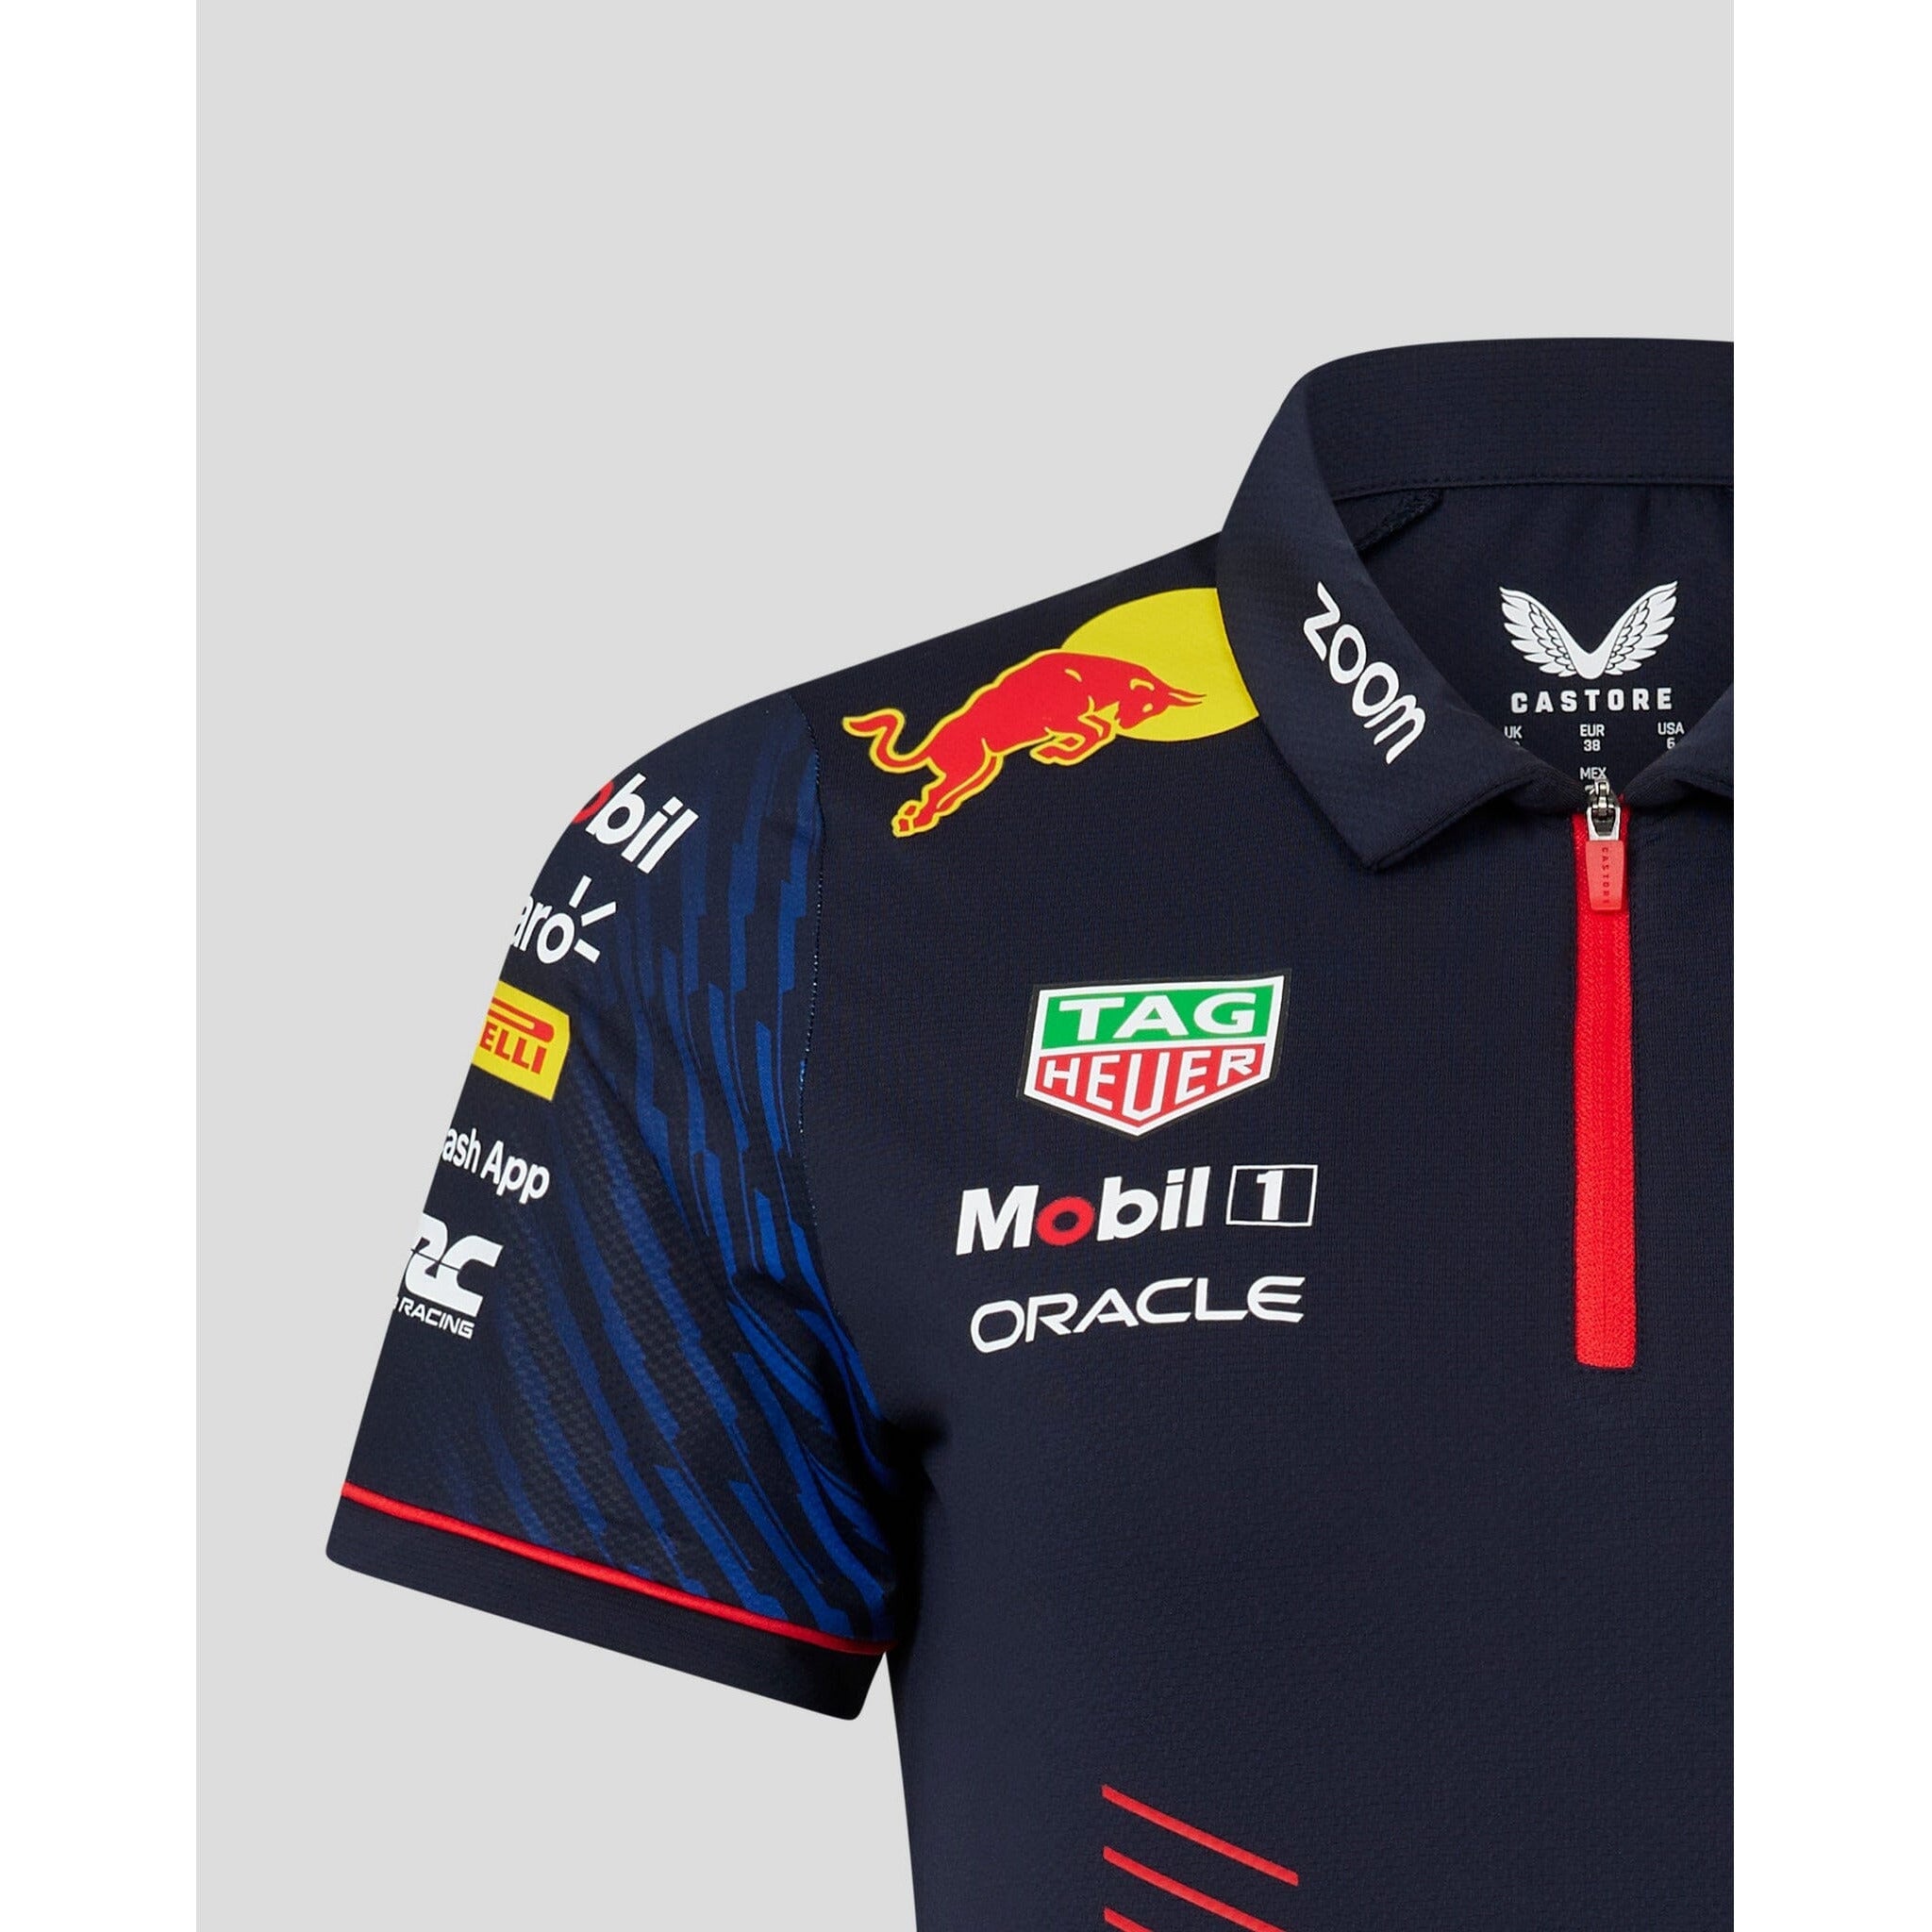 Red Bull Racing Team Polo Shirt